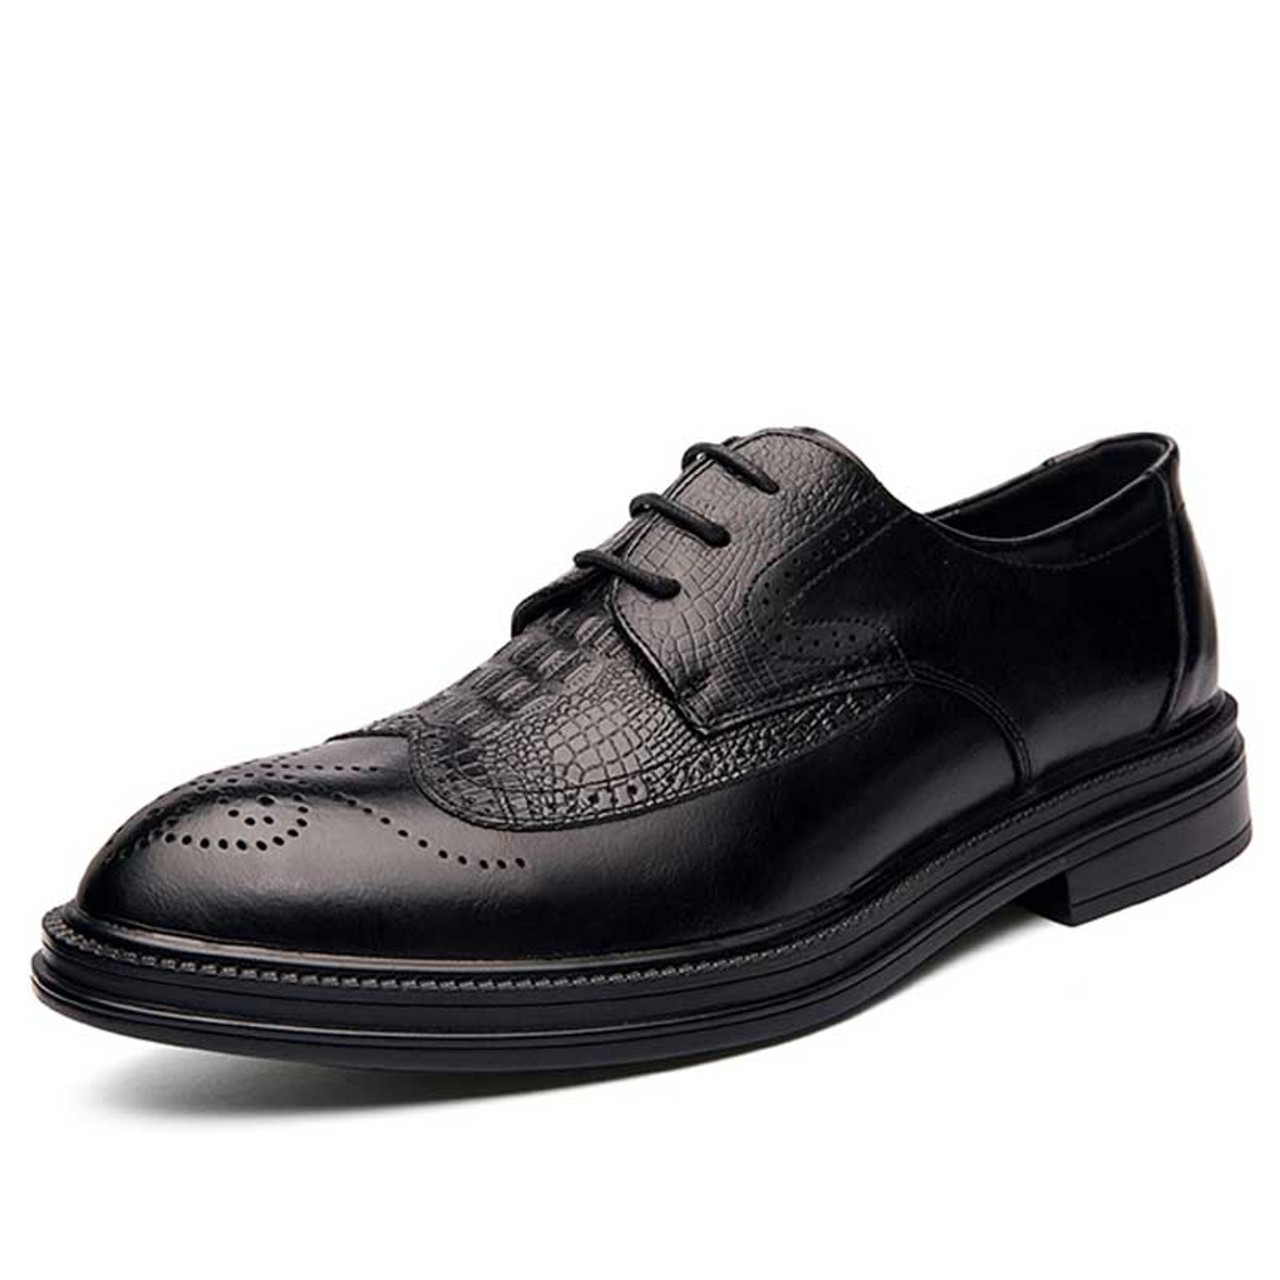 Black croc skin pattern retro brogue derby dress shoe | Mens dress ...